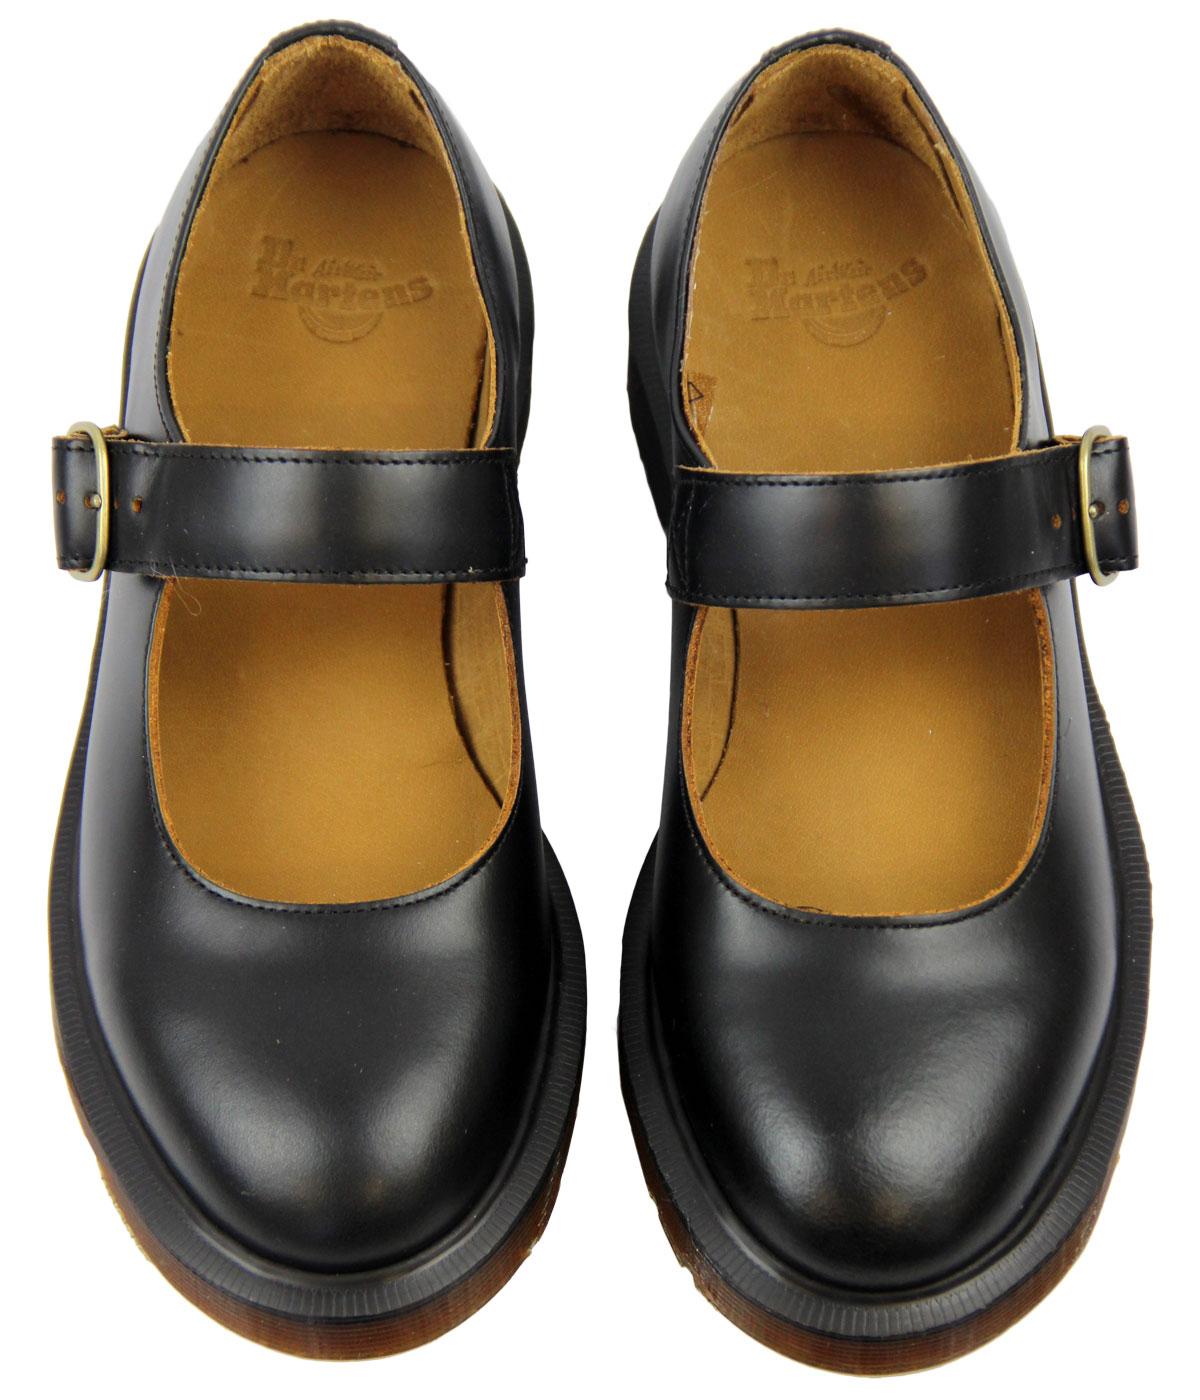 Indica Dr Martens Retro 60s Vintage Mary Jane Shoes Black